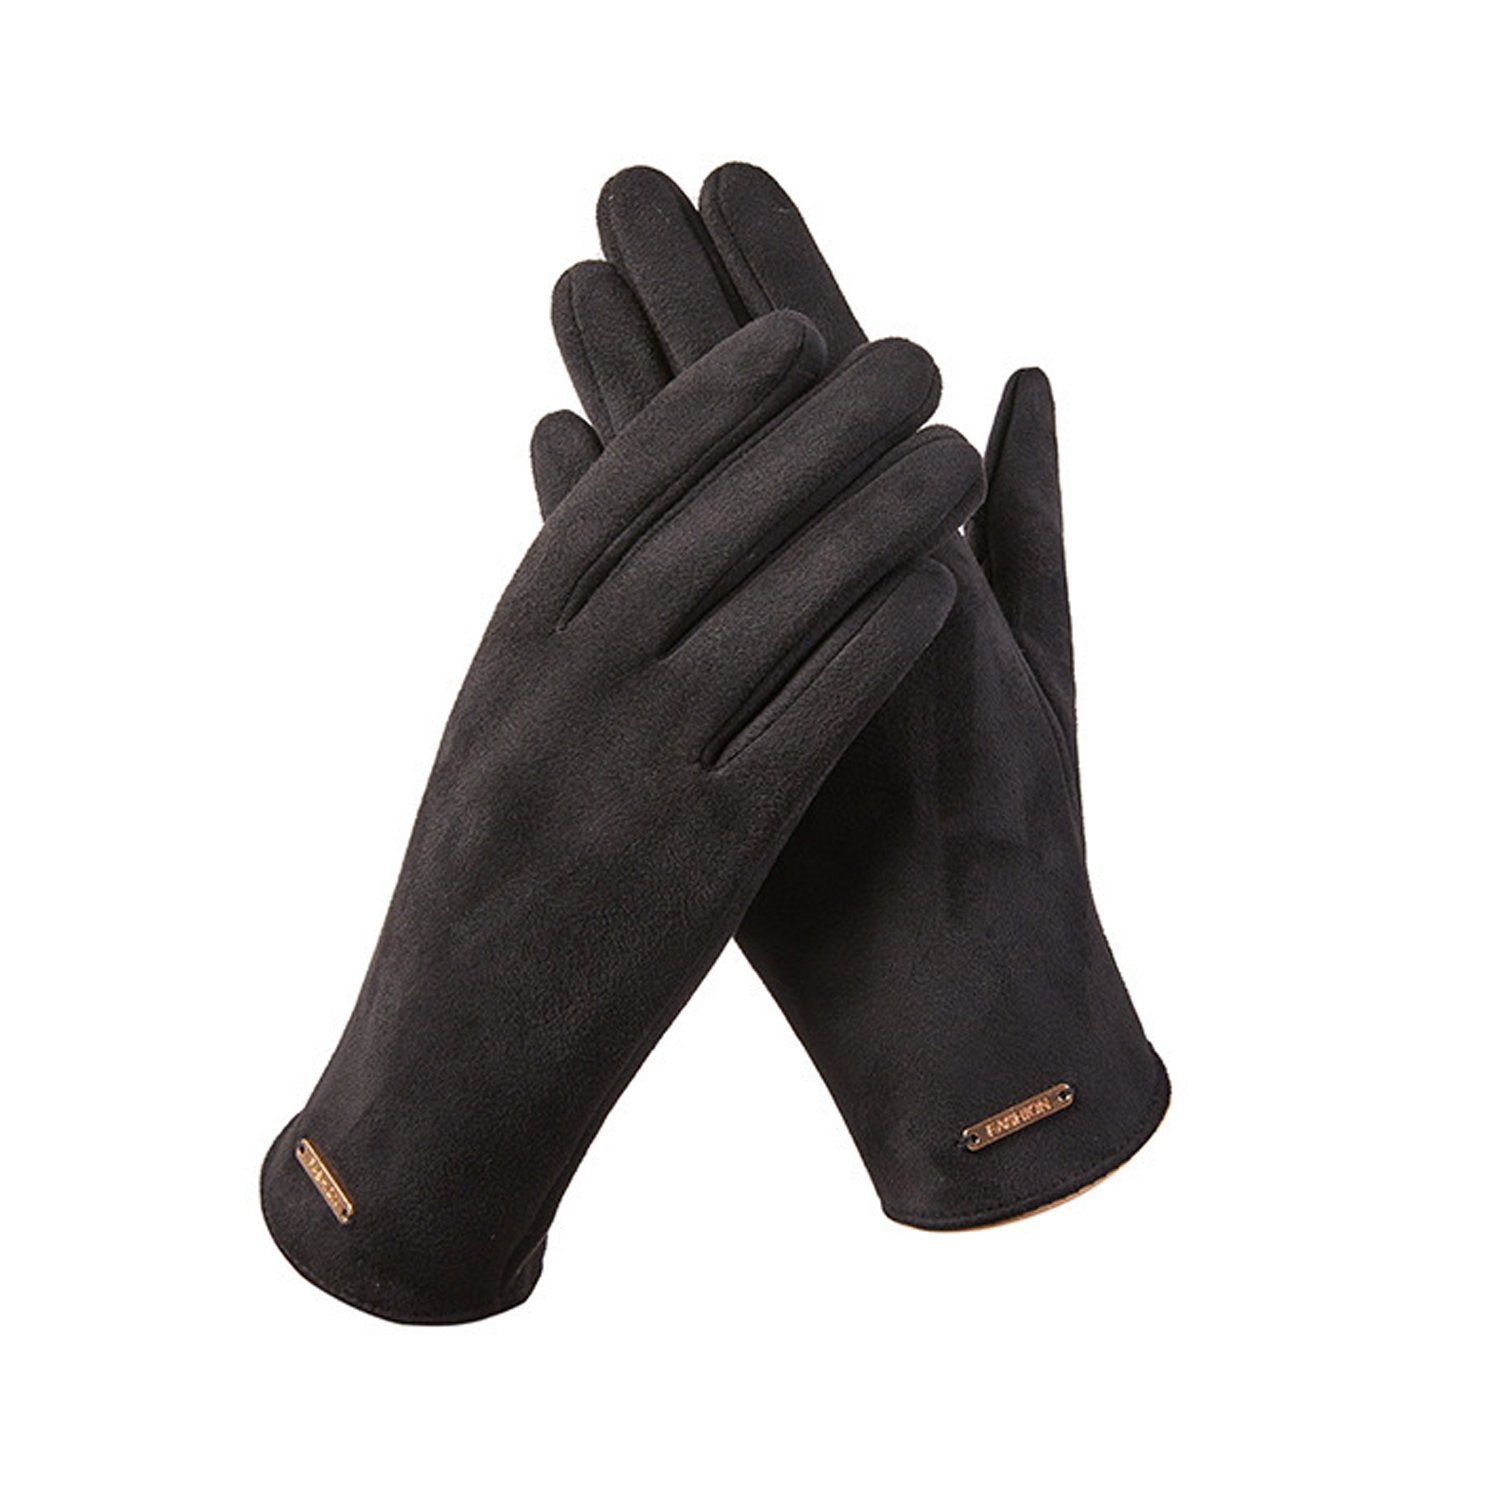 Extrem beliebte Neuware MAGICSHE Fleecehandschuhe FahrradhandschuheTouchscreen Herren/Damen Schwarz Warme Handschuhe